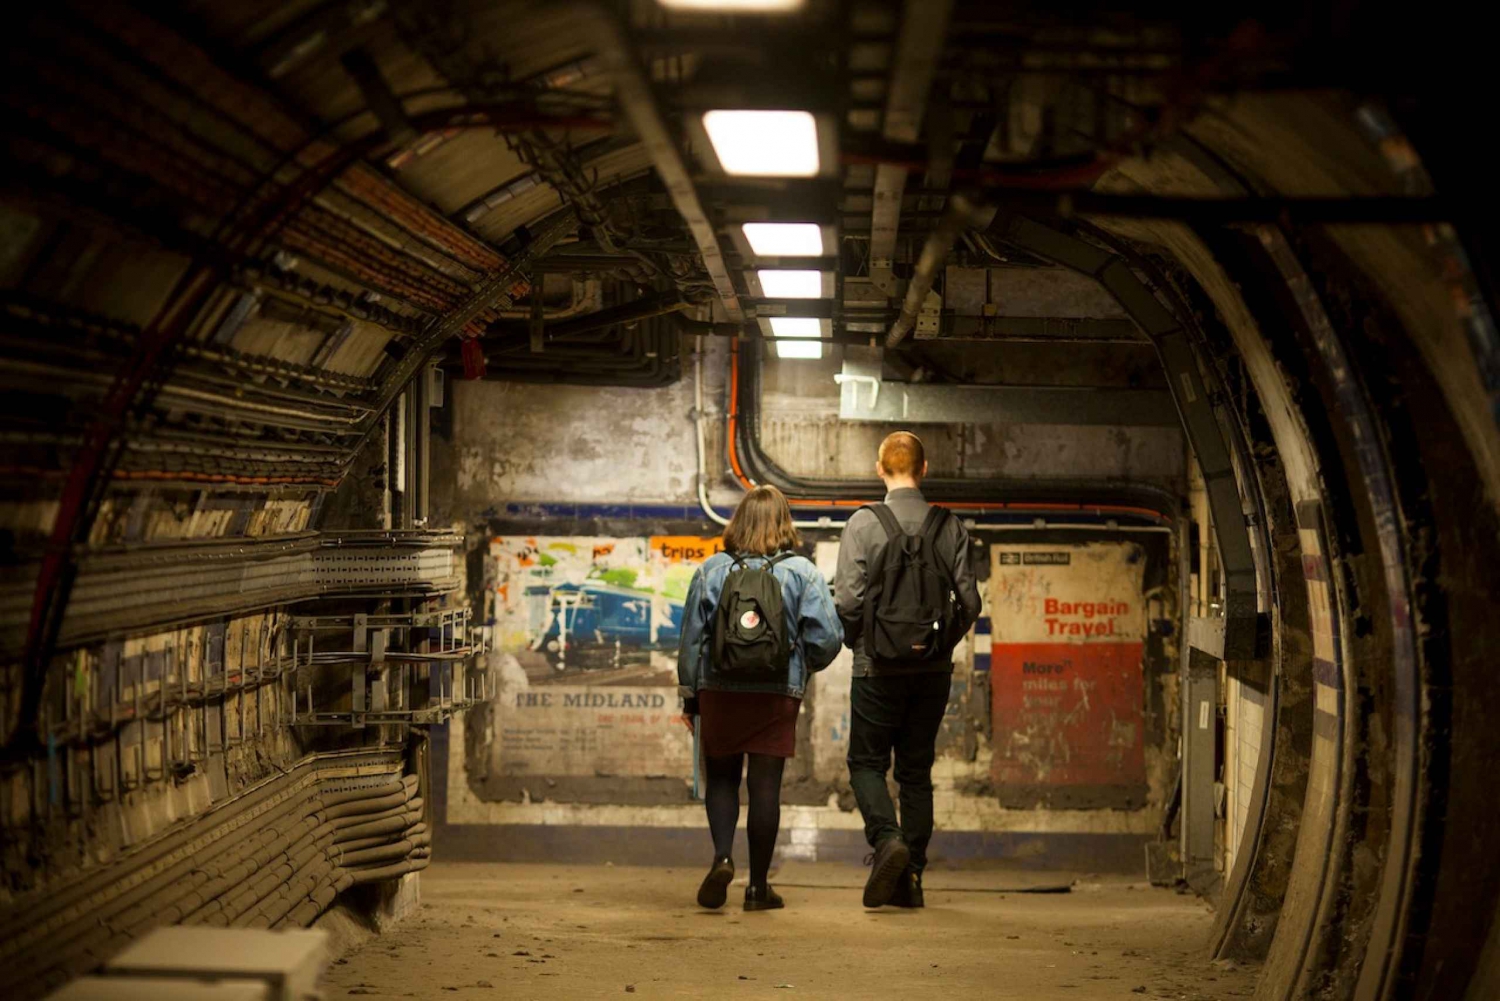 Versteckte Tube Station Tour: Euston The Lost Tunnels